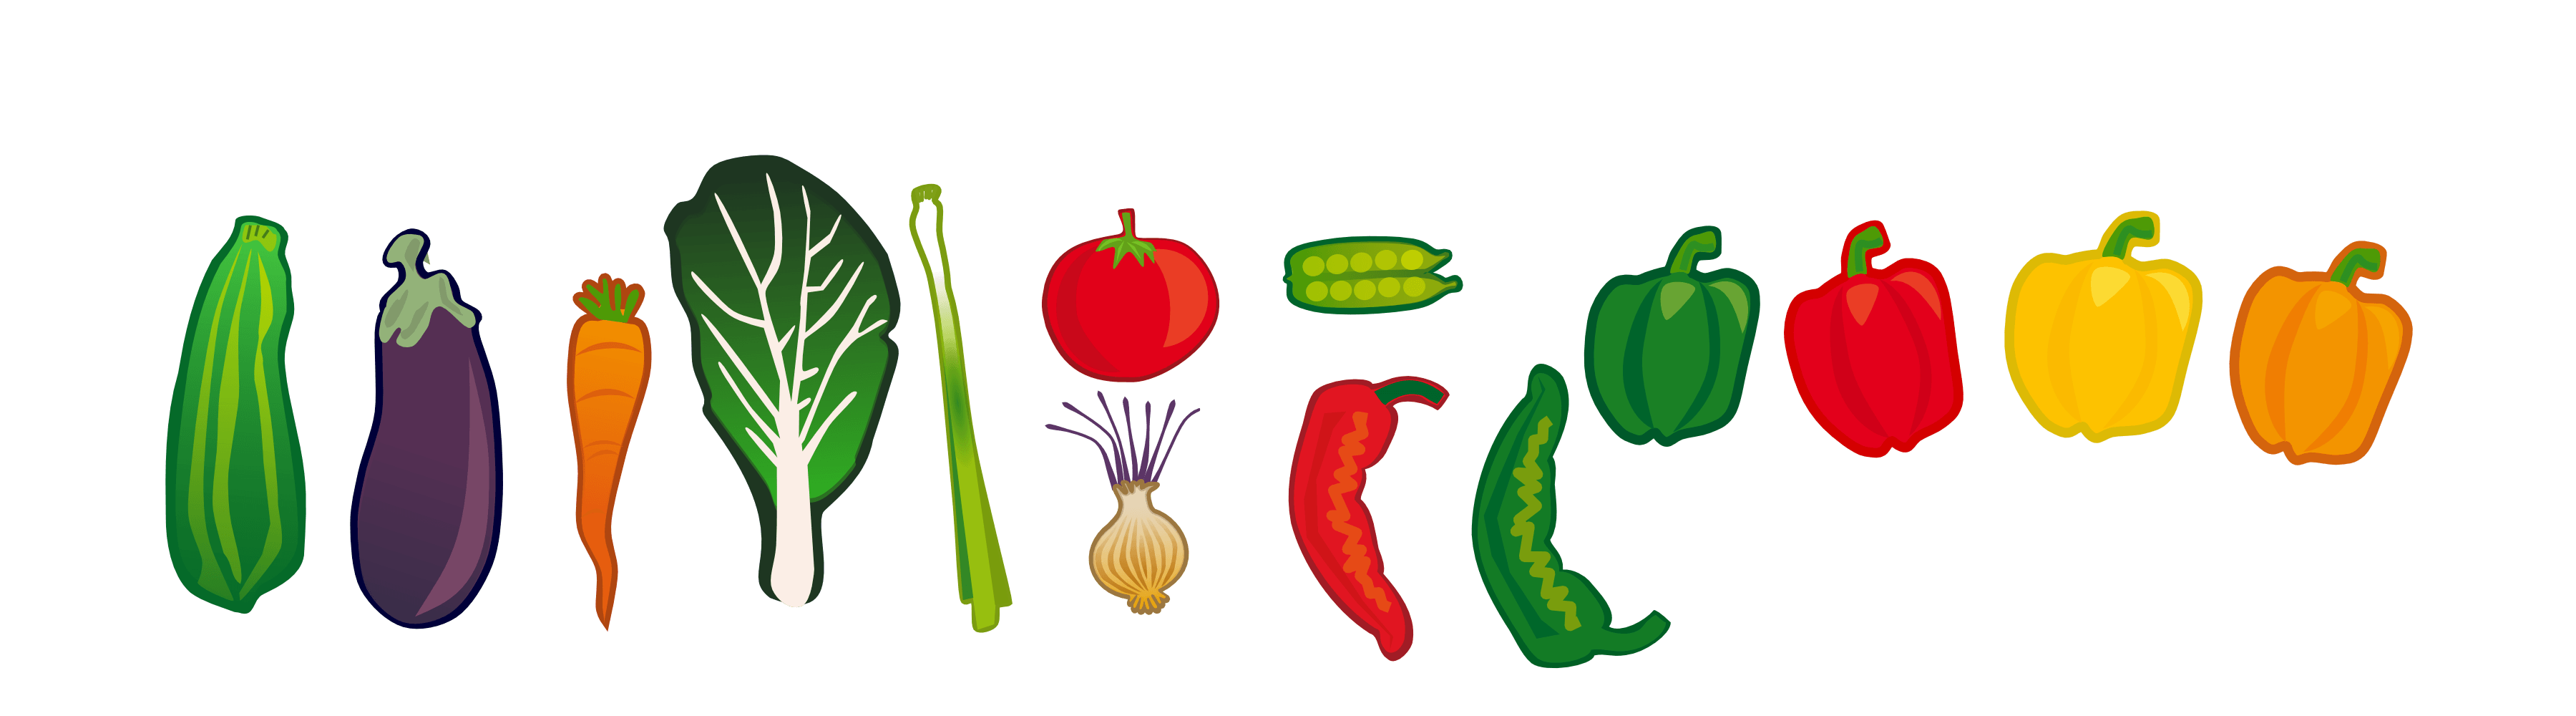 vegetables clipart logo